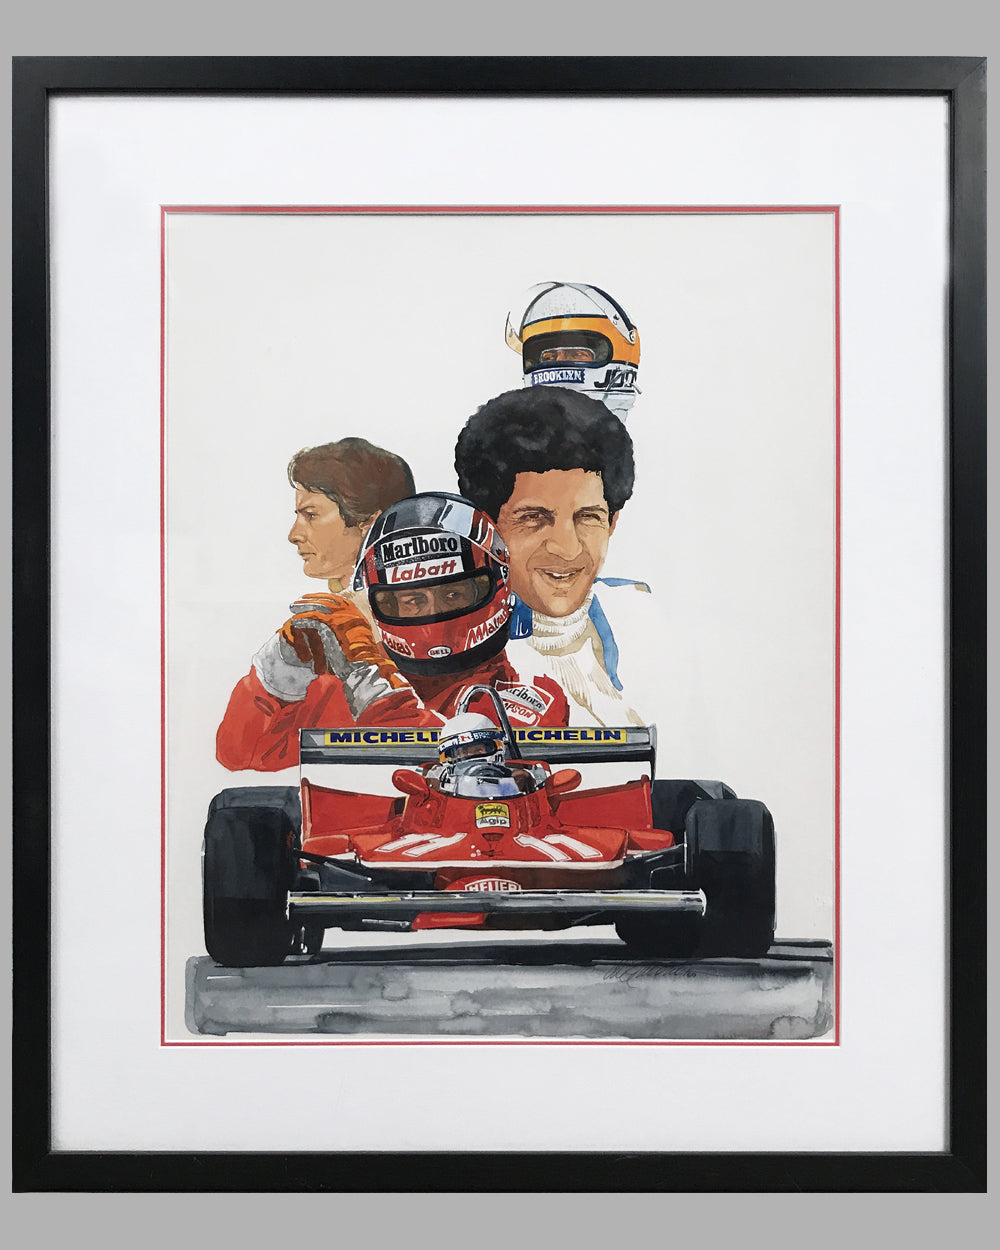 Ferrari, World Champion painting by Chuck Queener, U.S.A., 1979